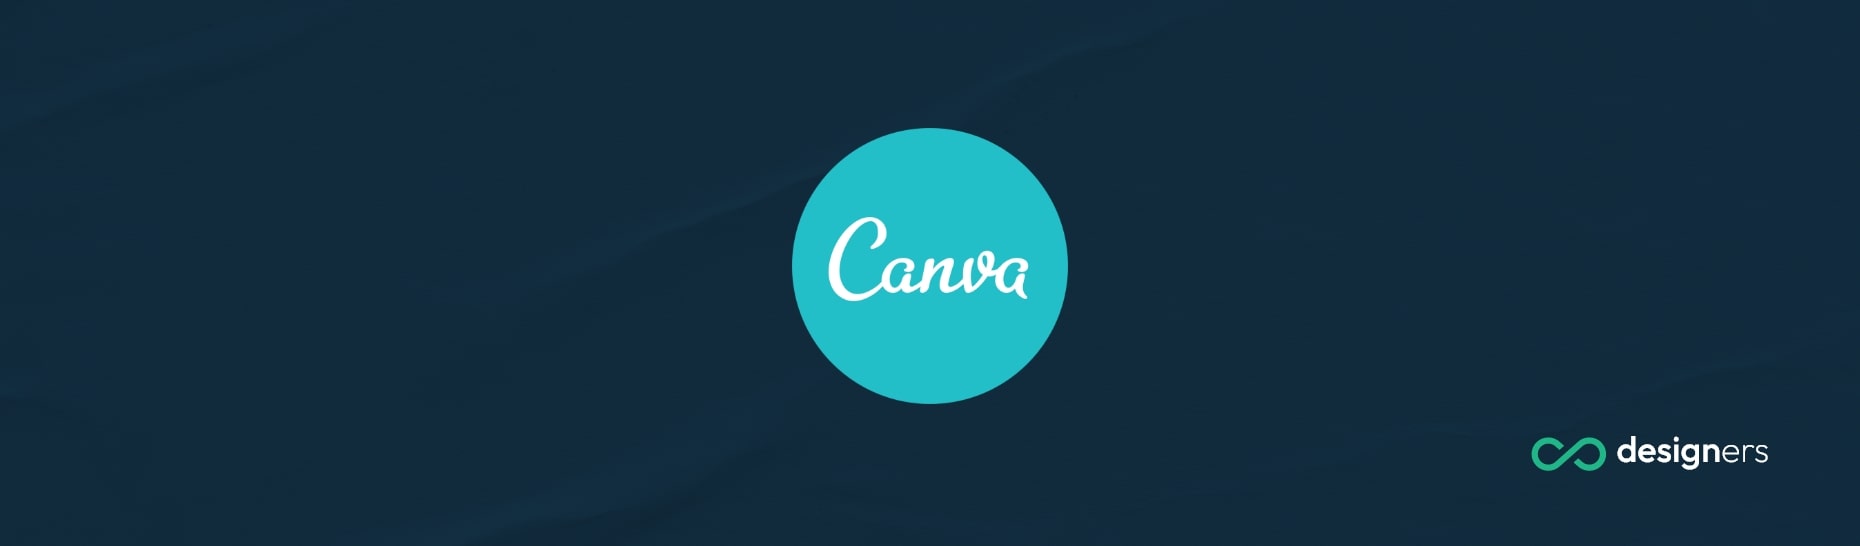 Is Canva Private Company?